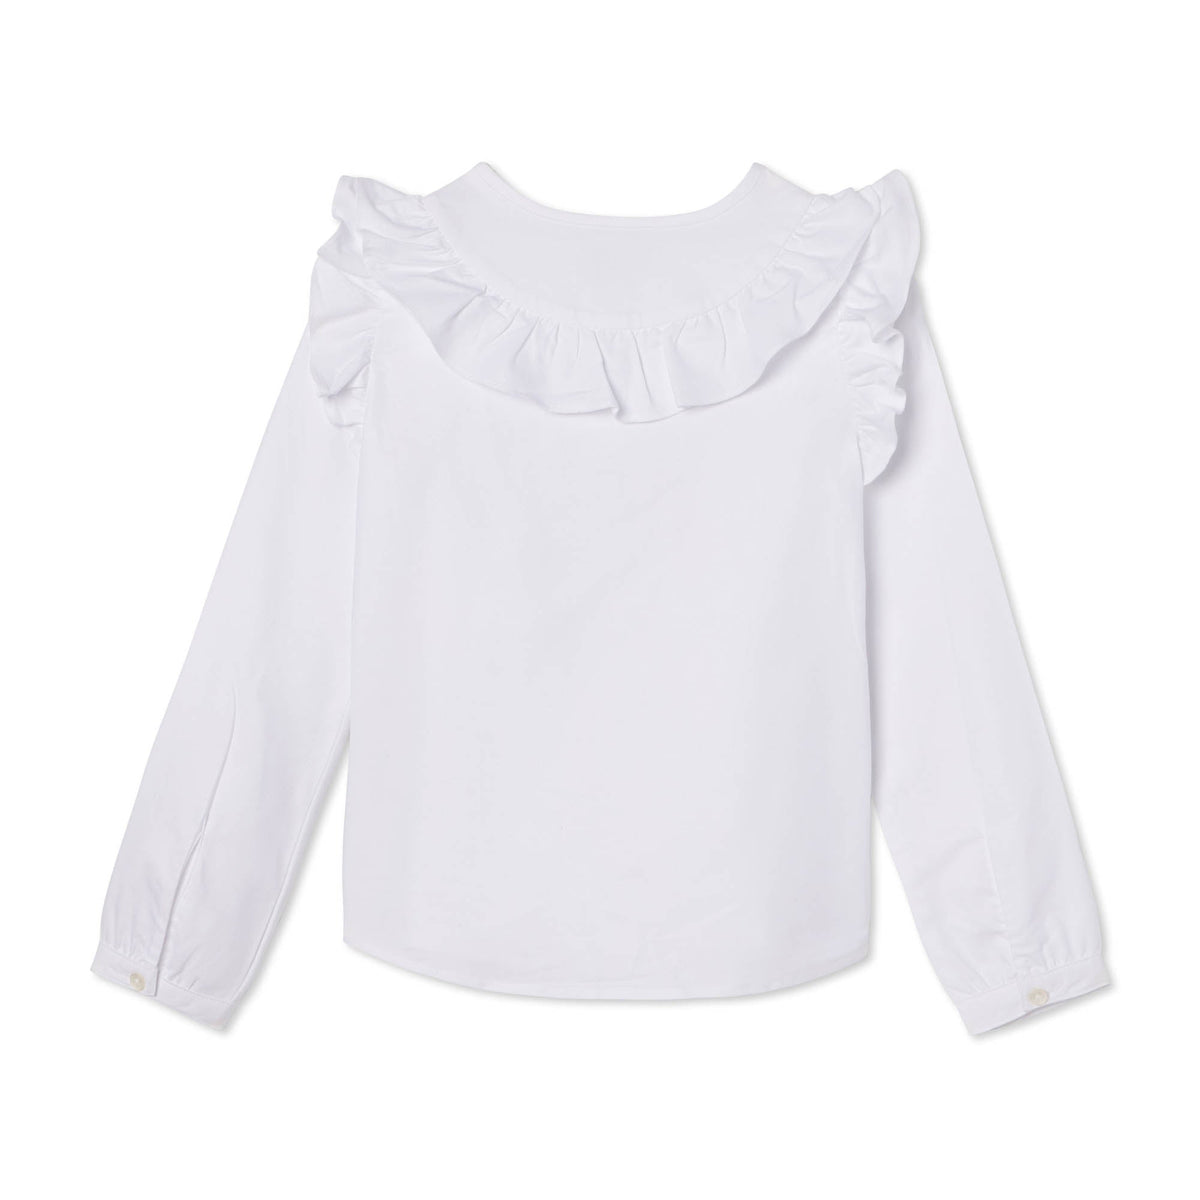 Classic and Preppy Gemma Top, Bright White Oxford-Shirts and Tops-CPC - Classic Prep Childrenswear